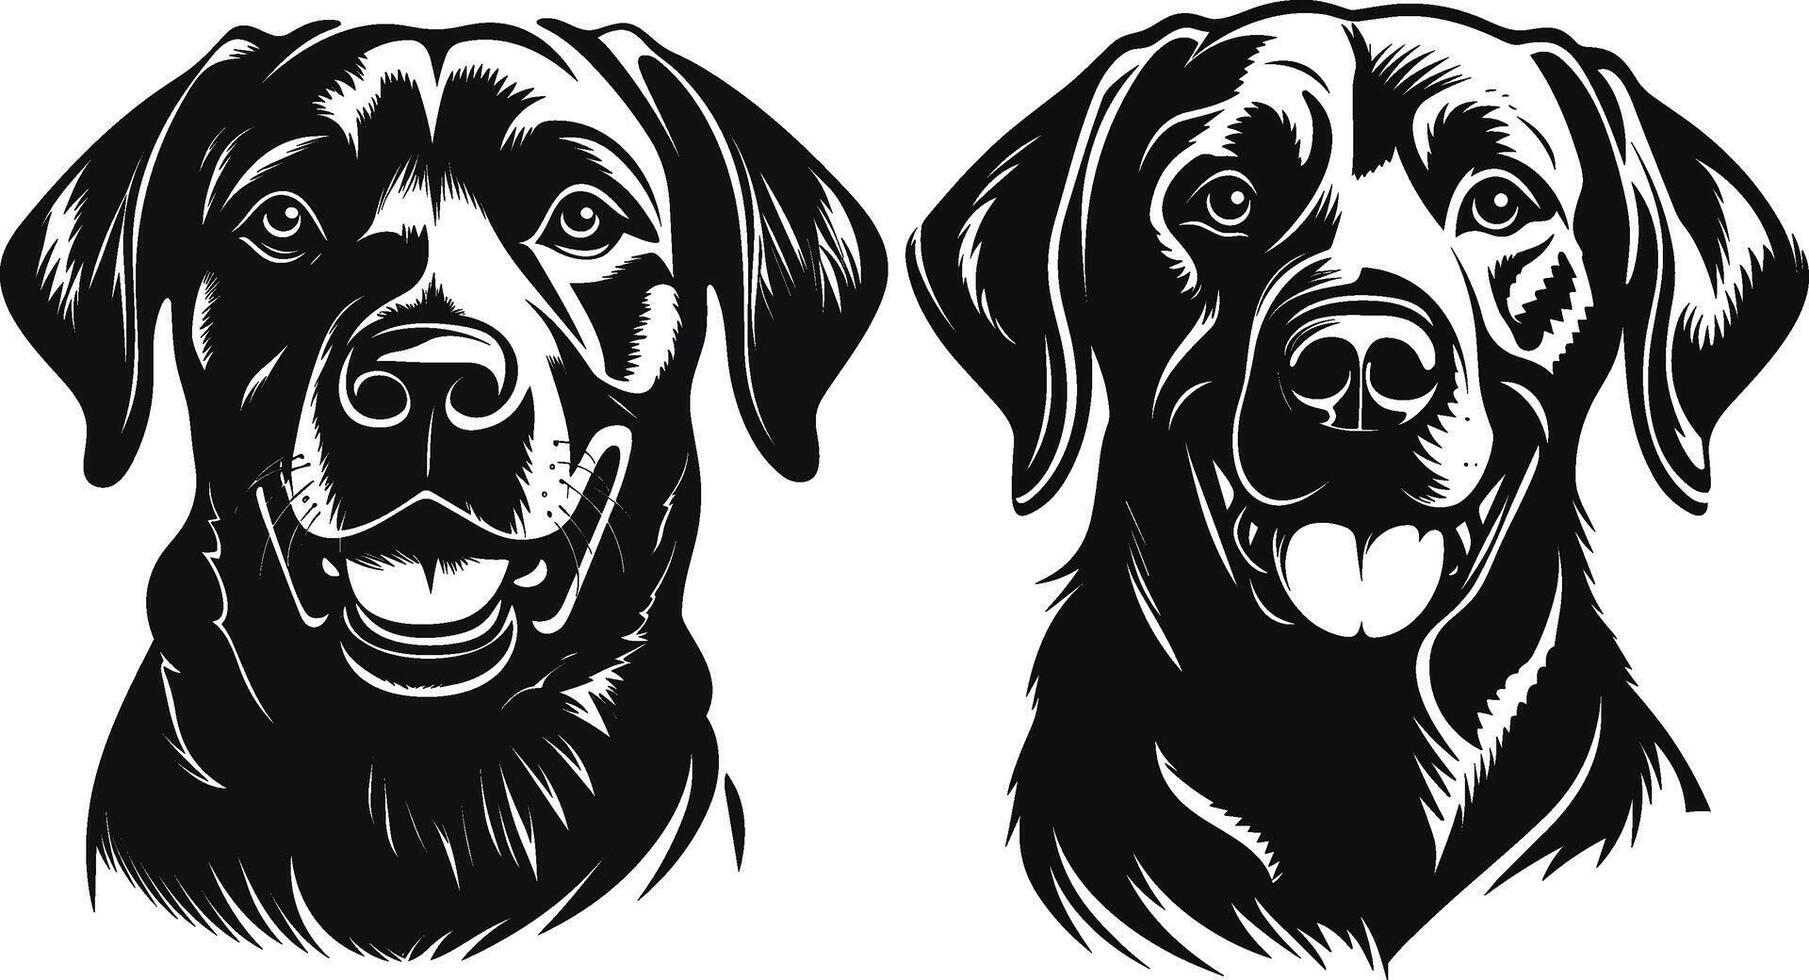 silhuett labrador retriever hund logotyp vektor